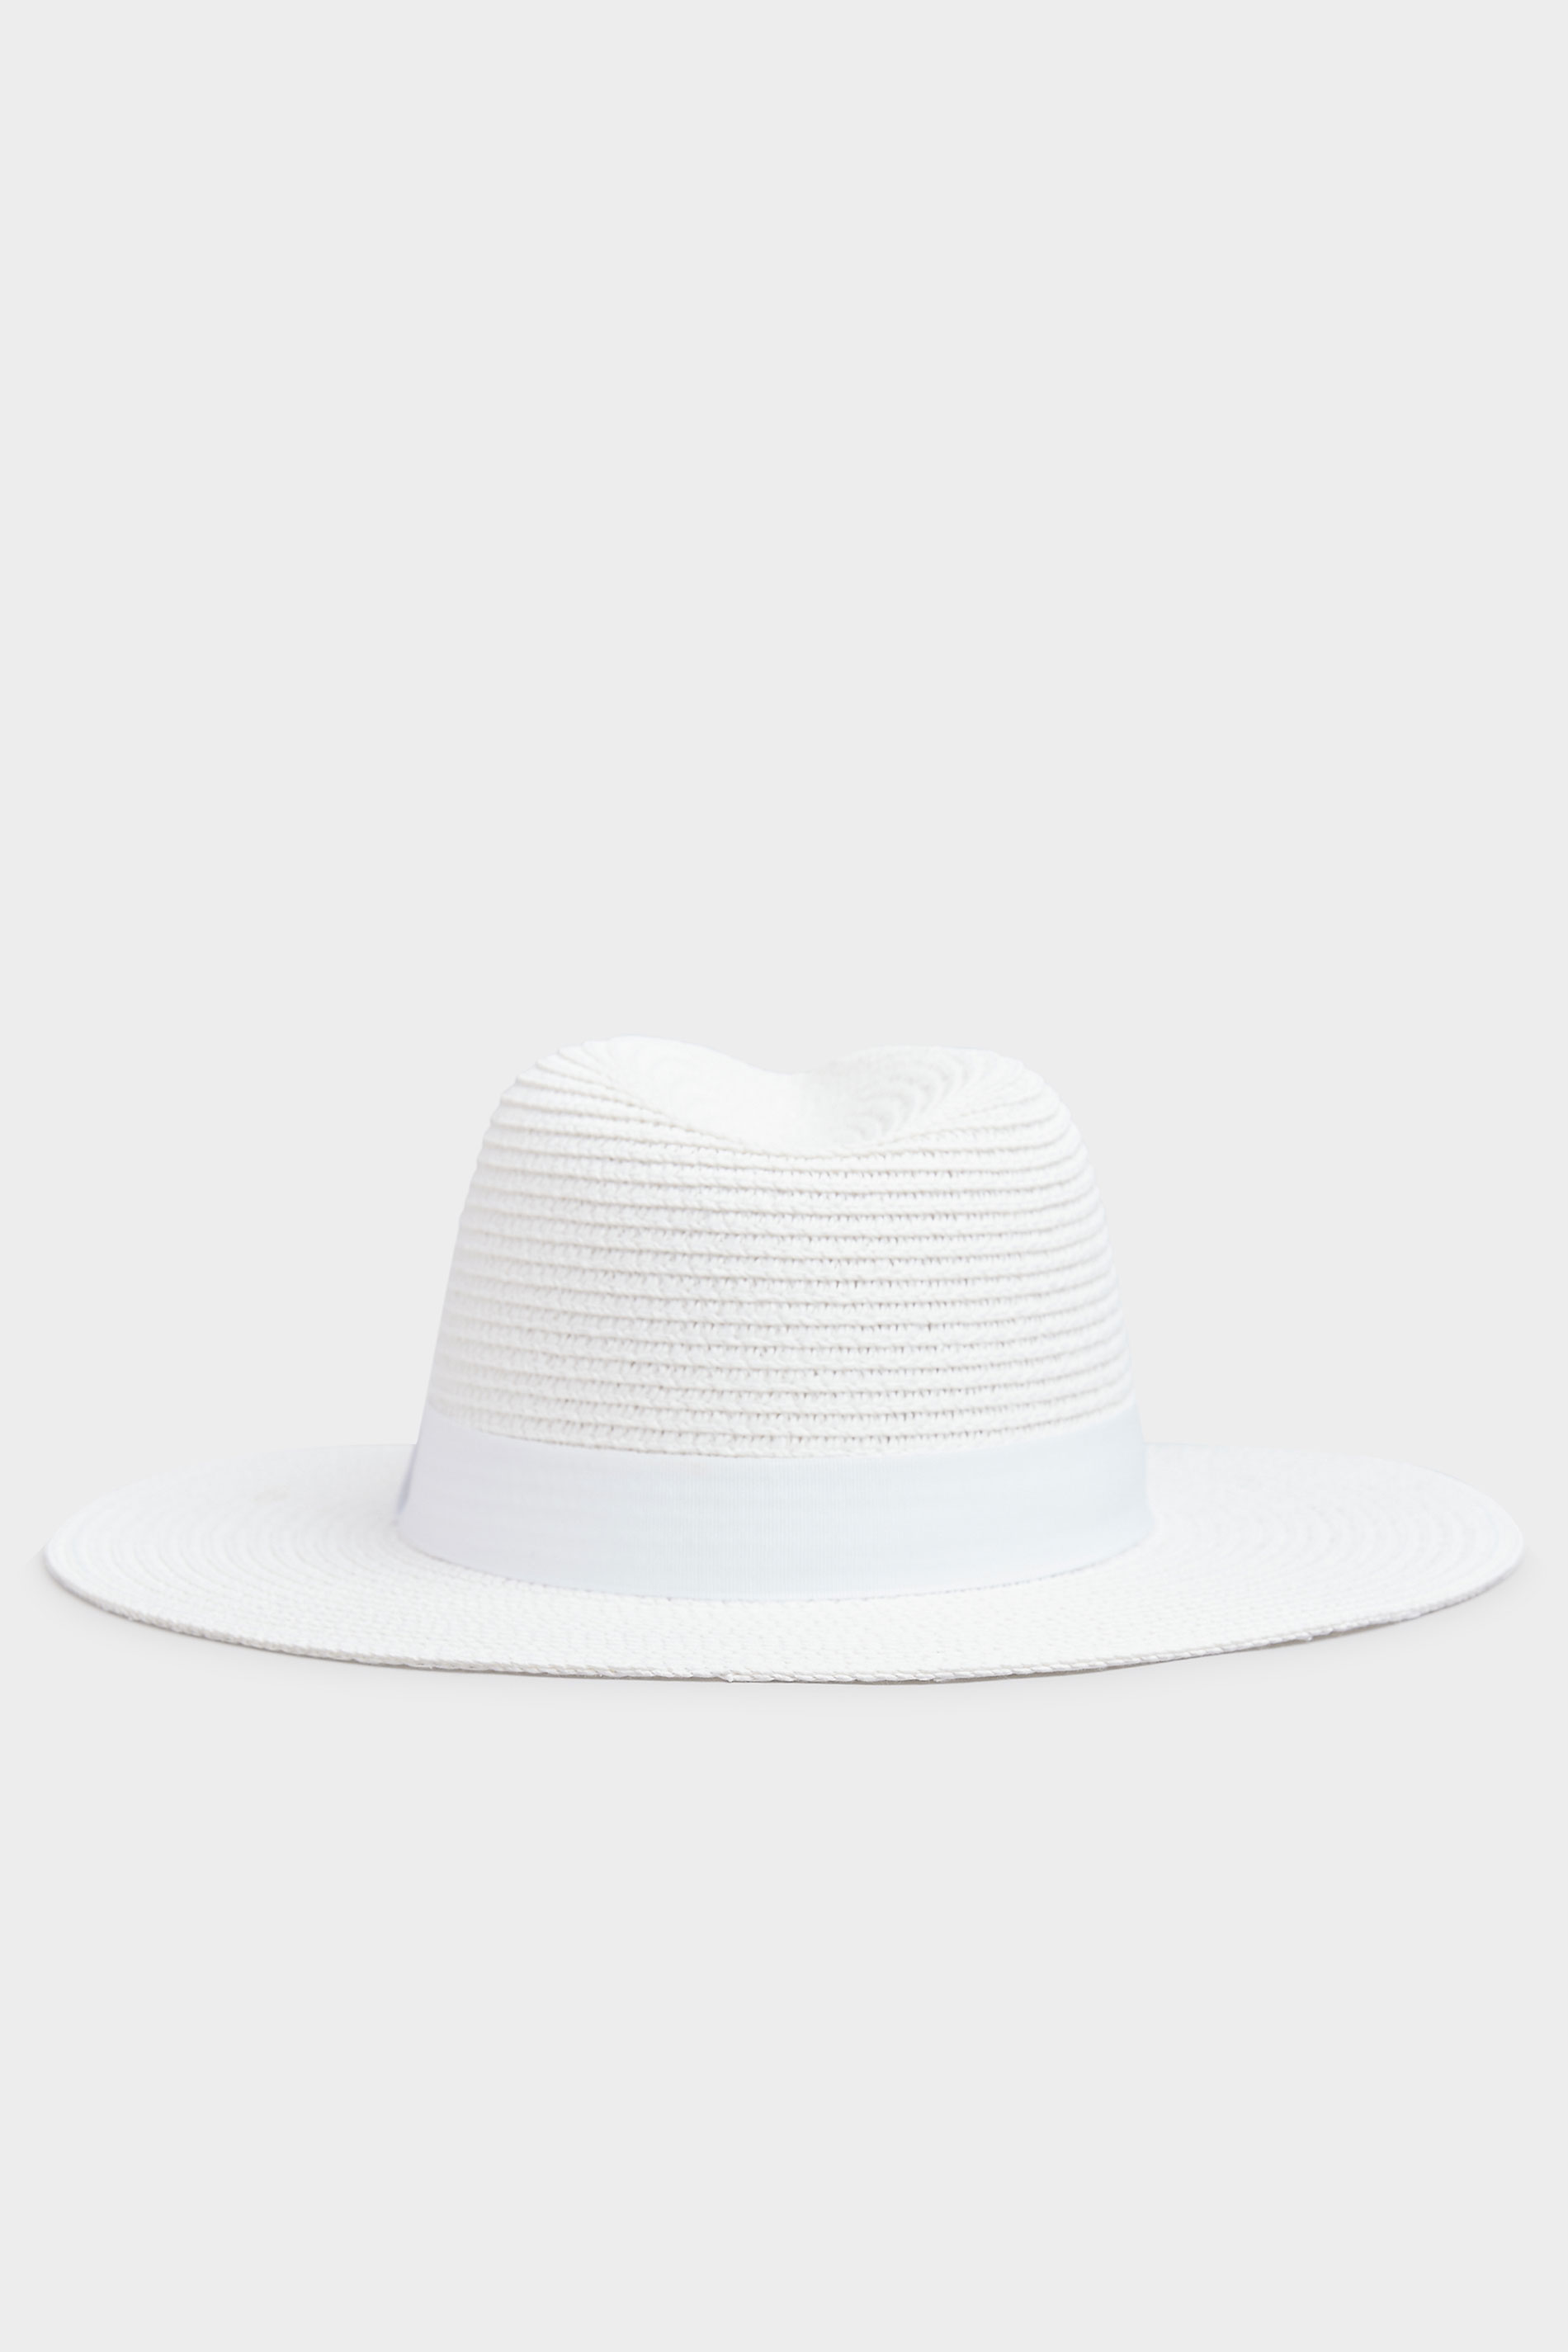 White Straw Fedora Hat | Yours Clothing 2